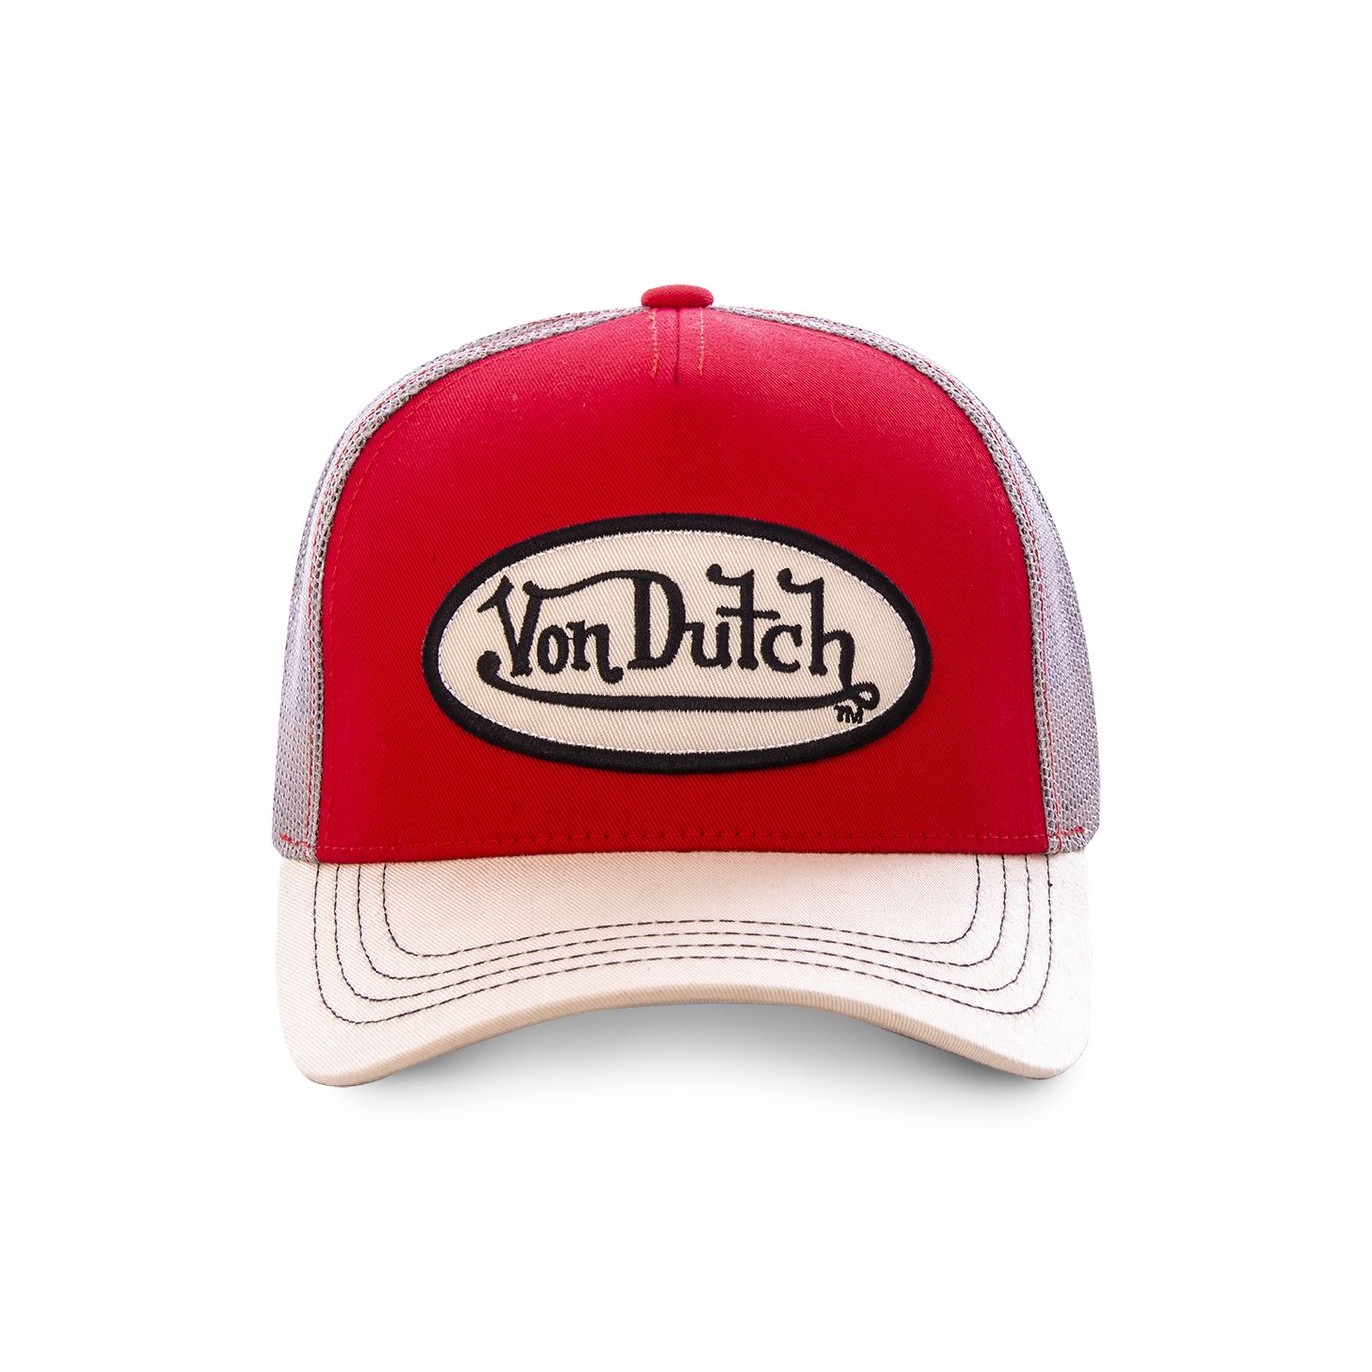 https://vondutch.fr/4738-superlarge_default/Casquette-baseball-Von-Dutch-Colors-Rouge-et-Blanc.jpg